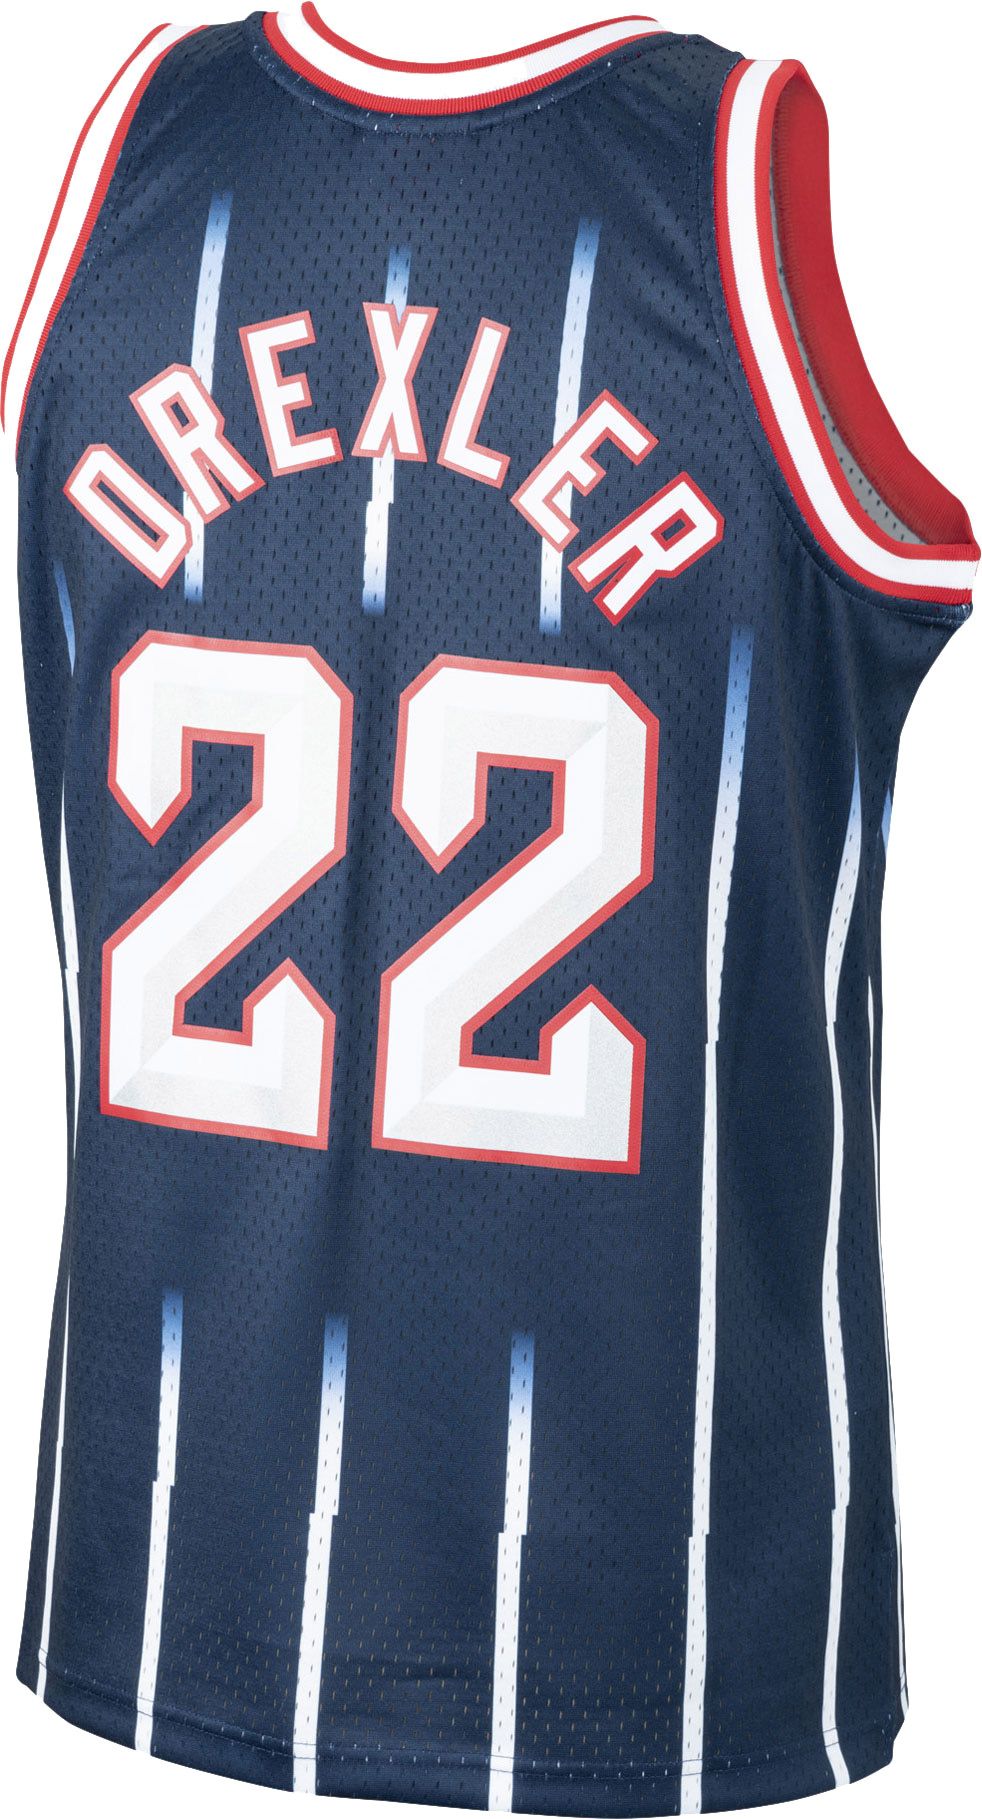 Clyde Drexler Rockets jersey purchase